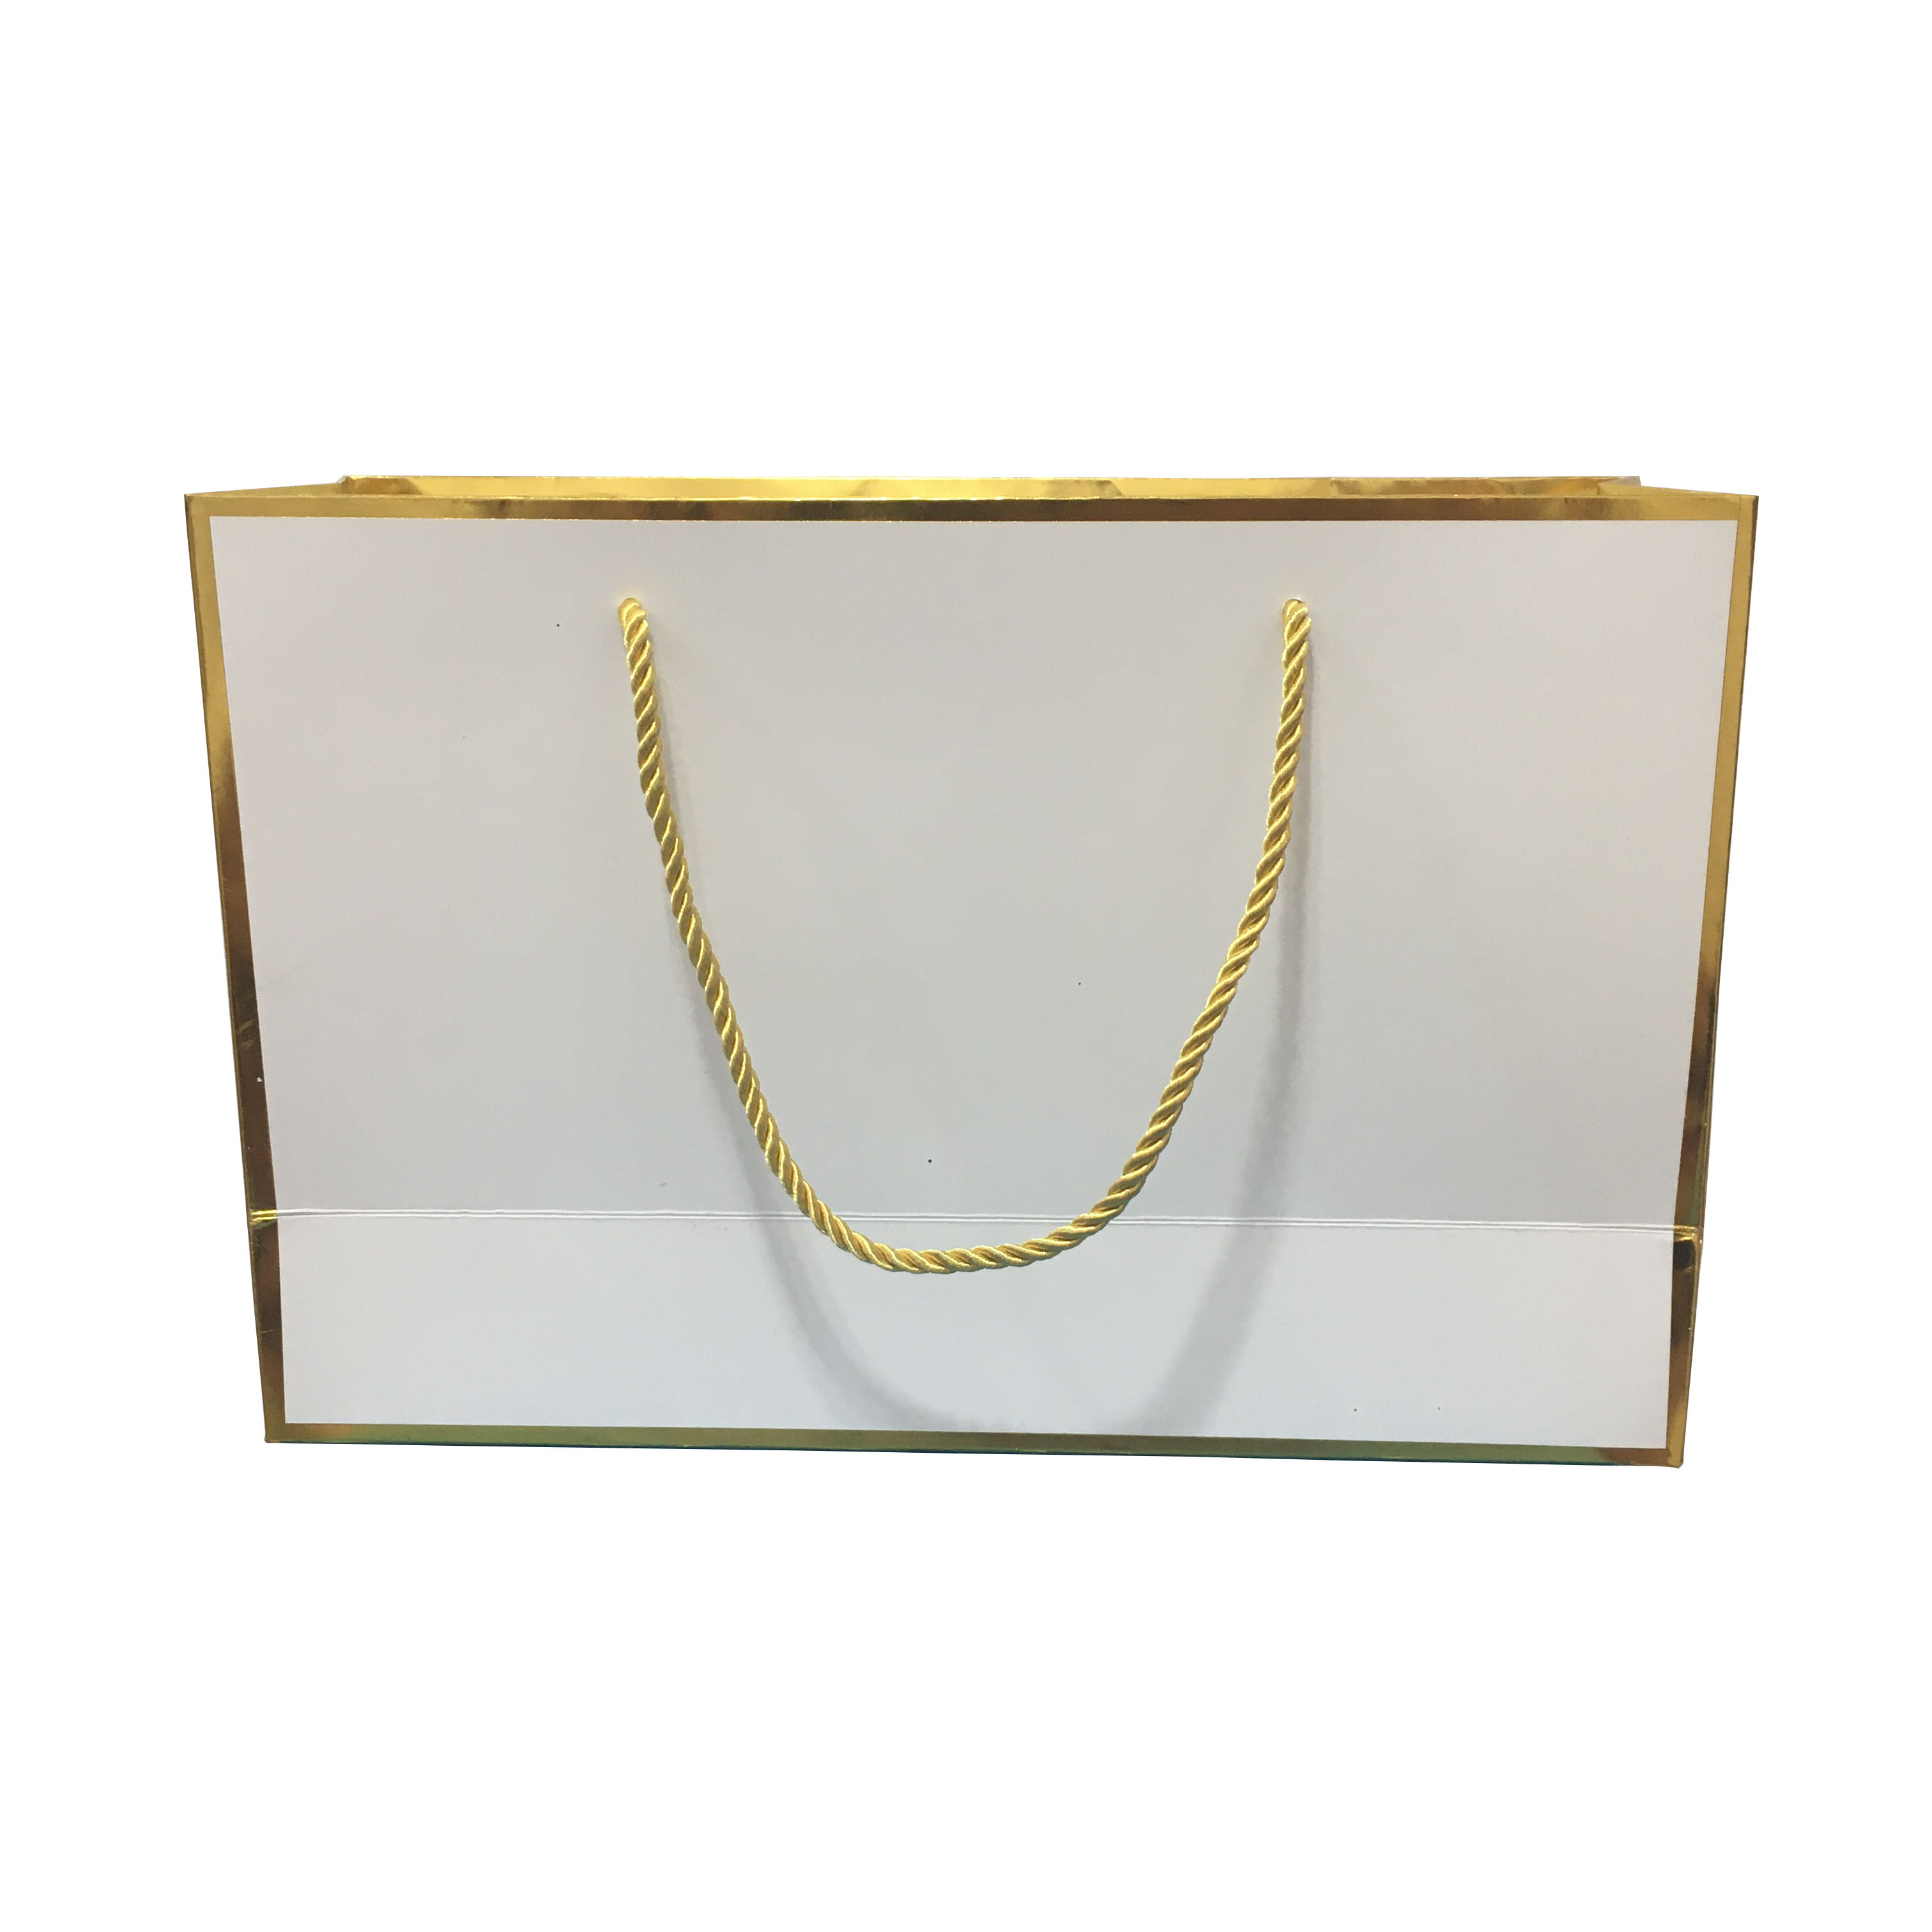 30*20*10cm size gold paper bag gold frame paper bag gold border paper bag with gold foil stamped in frame with gold pp rope handle